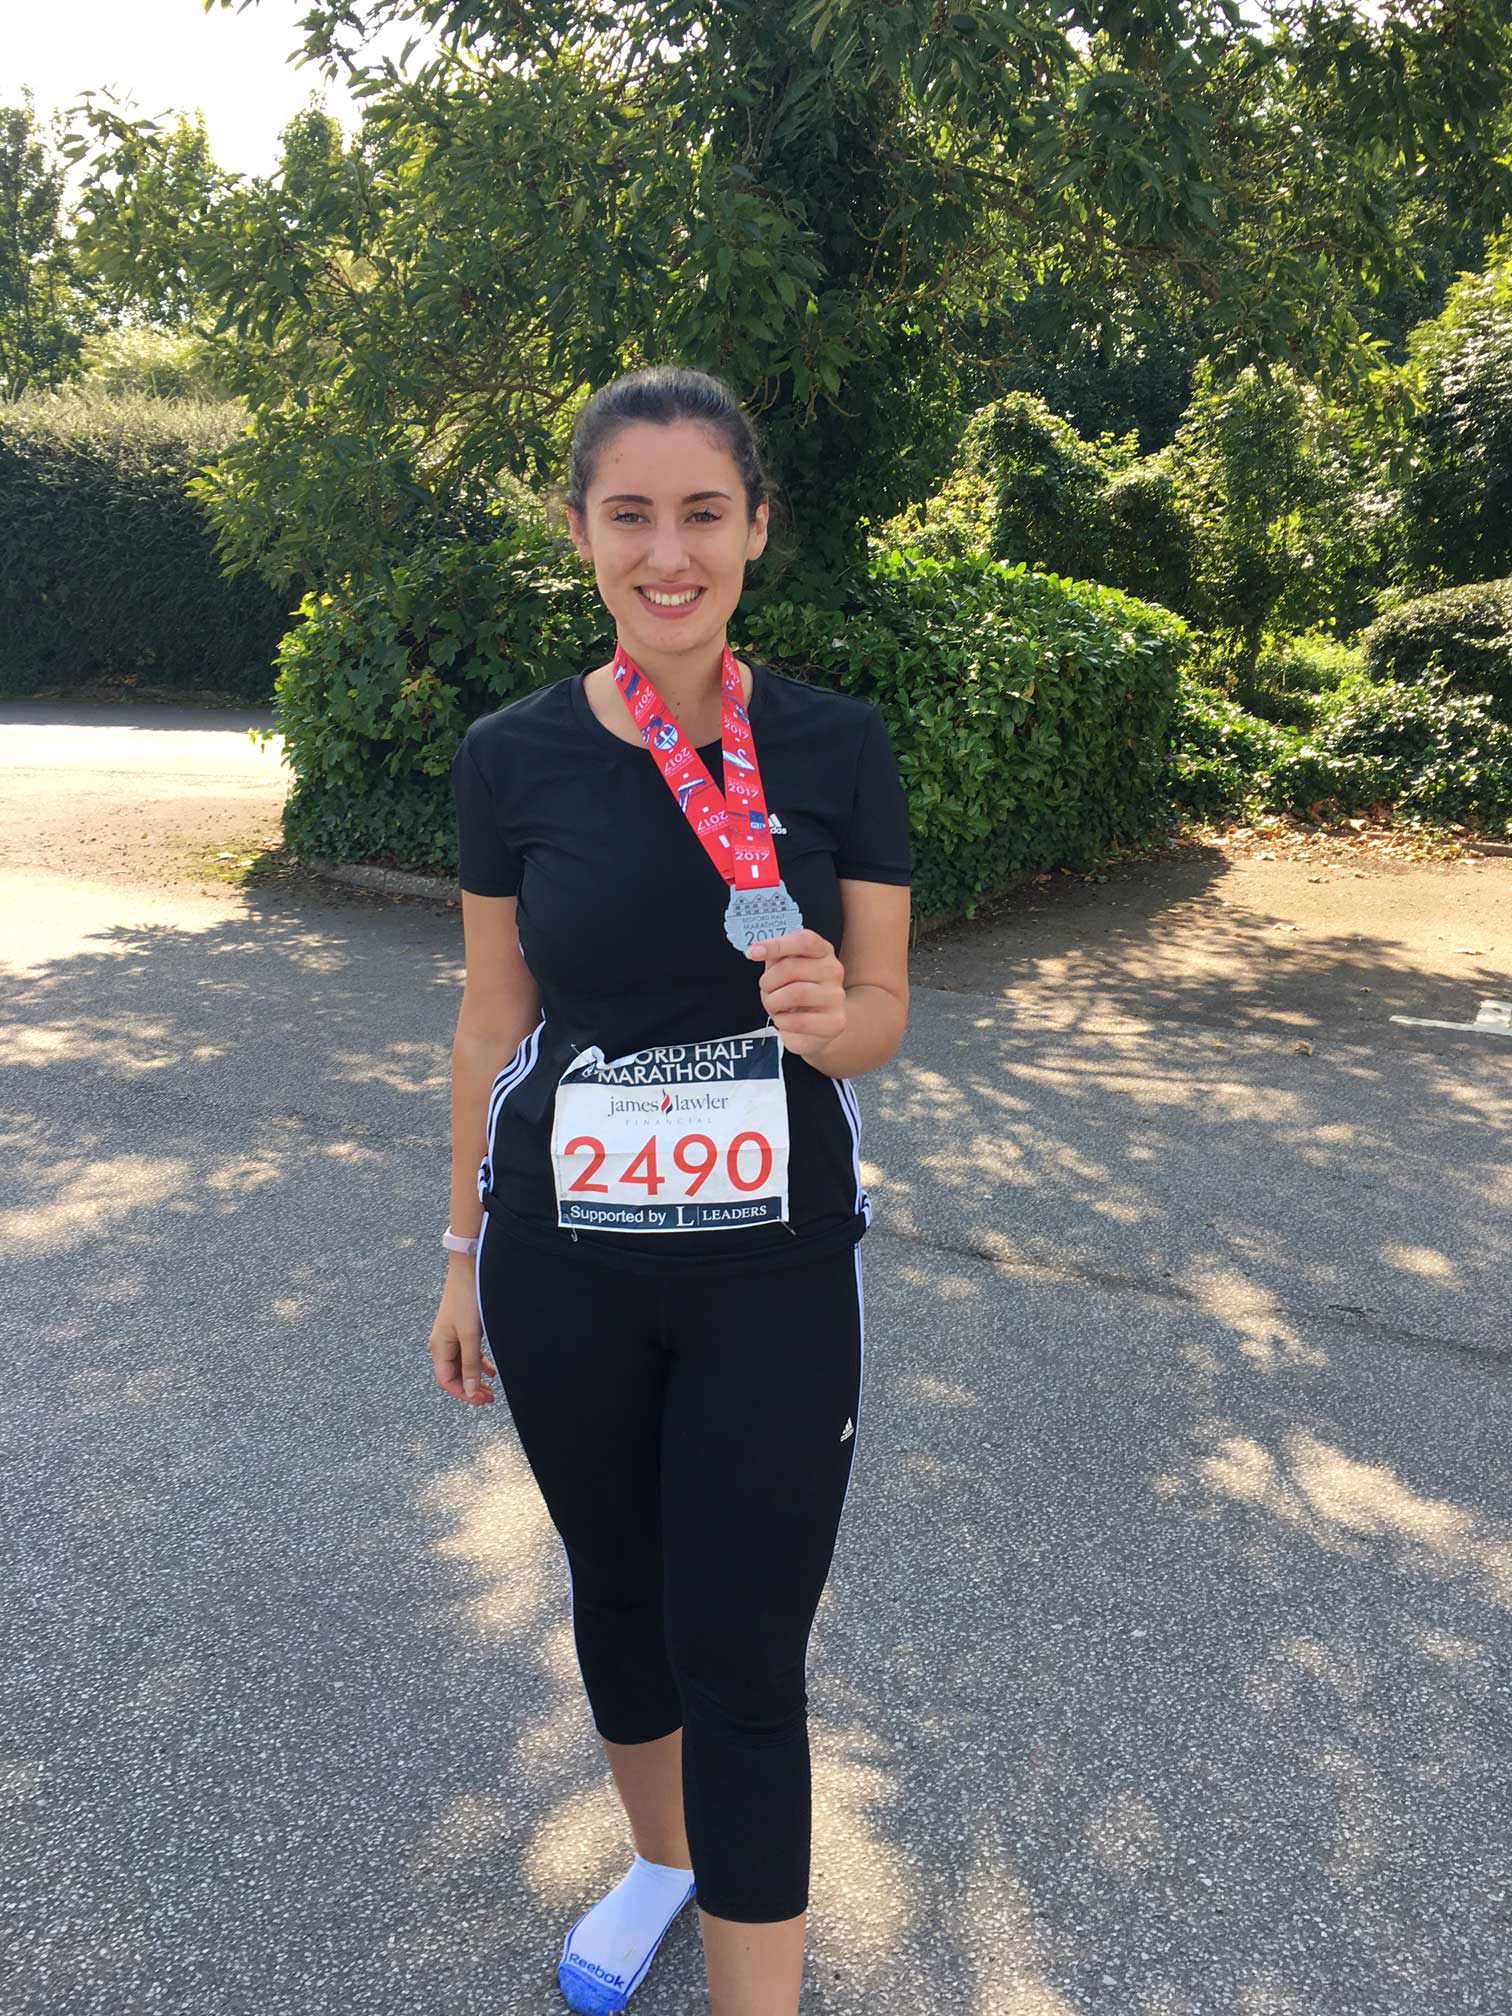 Featured image for “Chloe runs the half-marathon!”